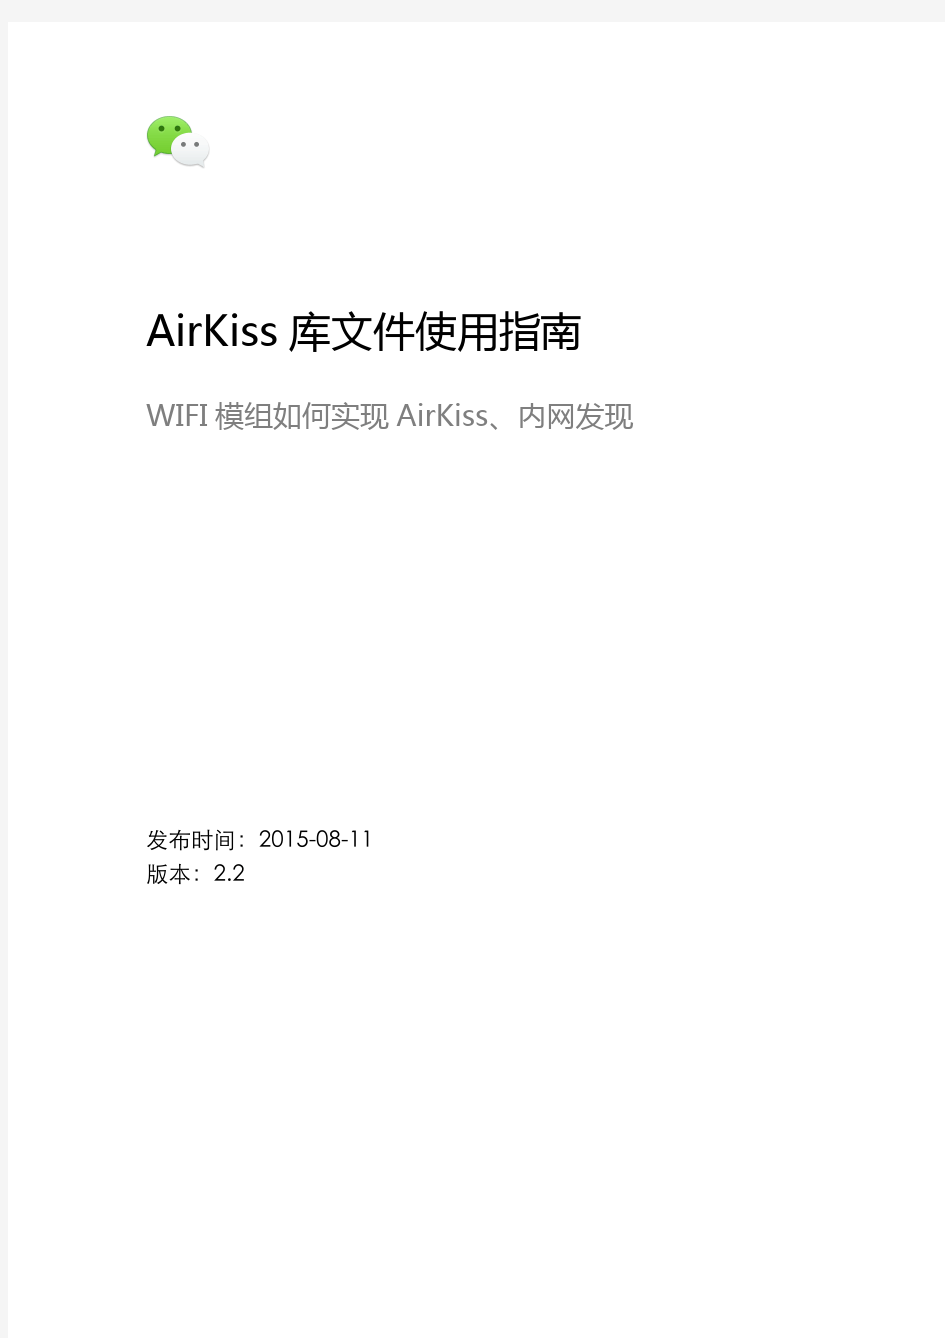 AirKiss 库文件使用指南